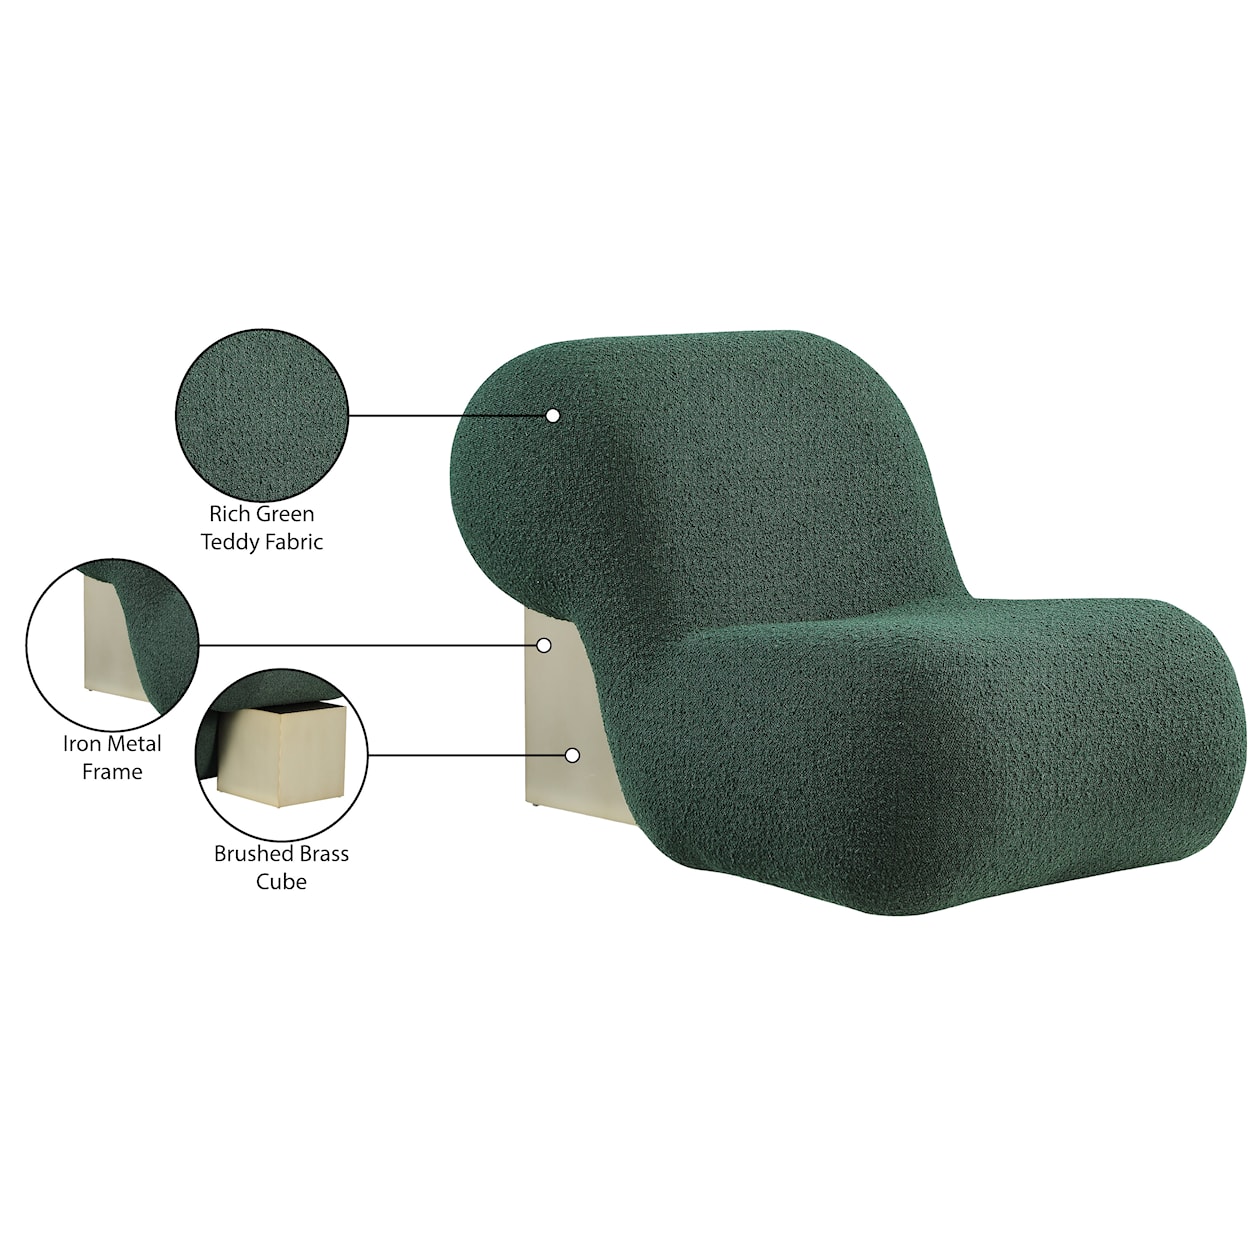 Meridian Furniture Quadra Accent Chair